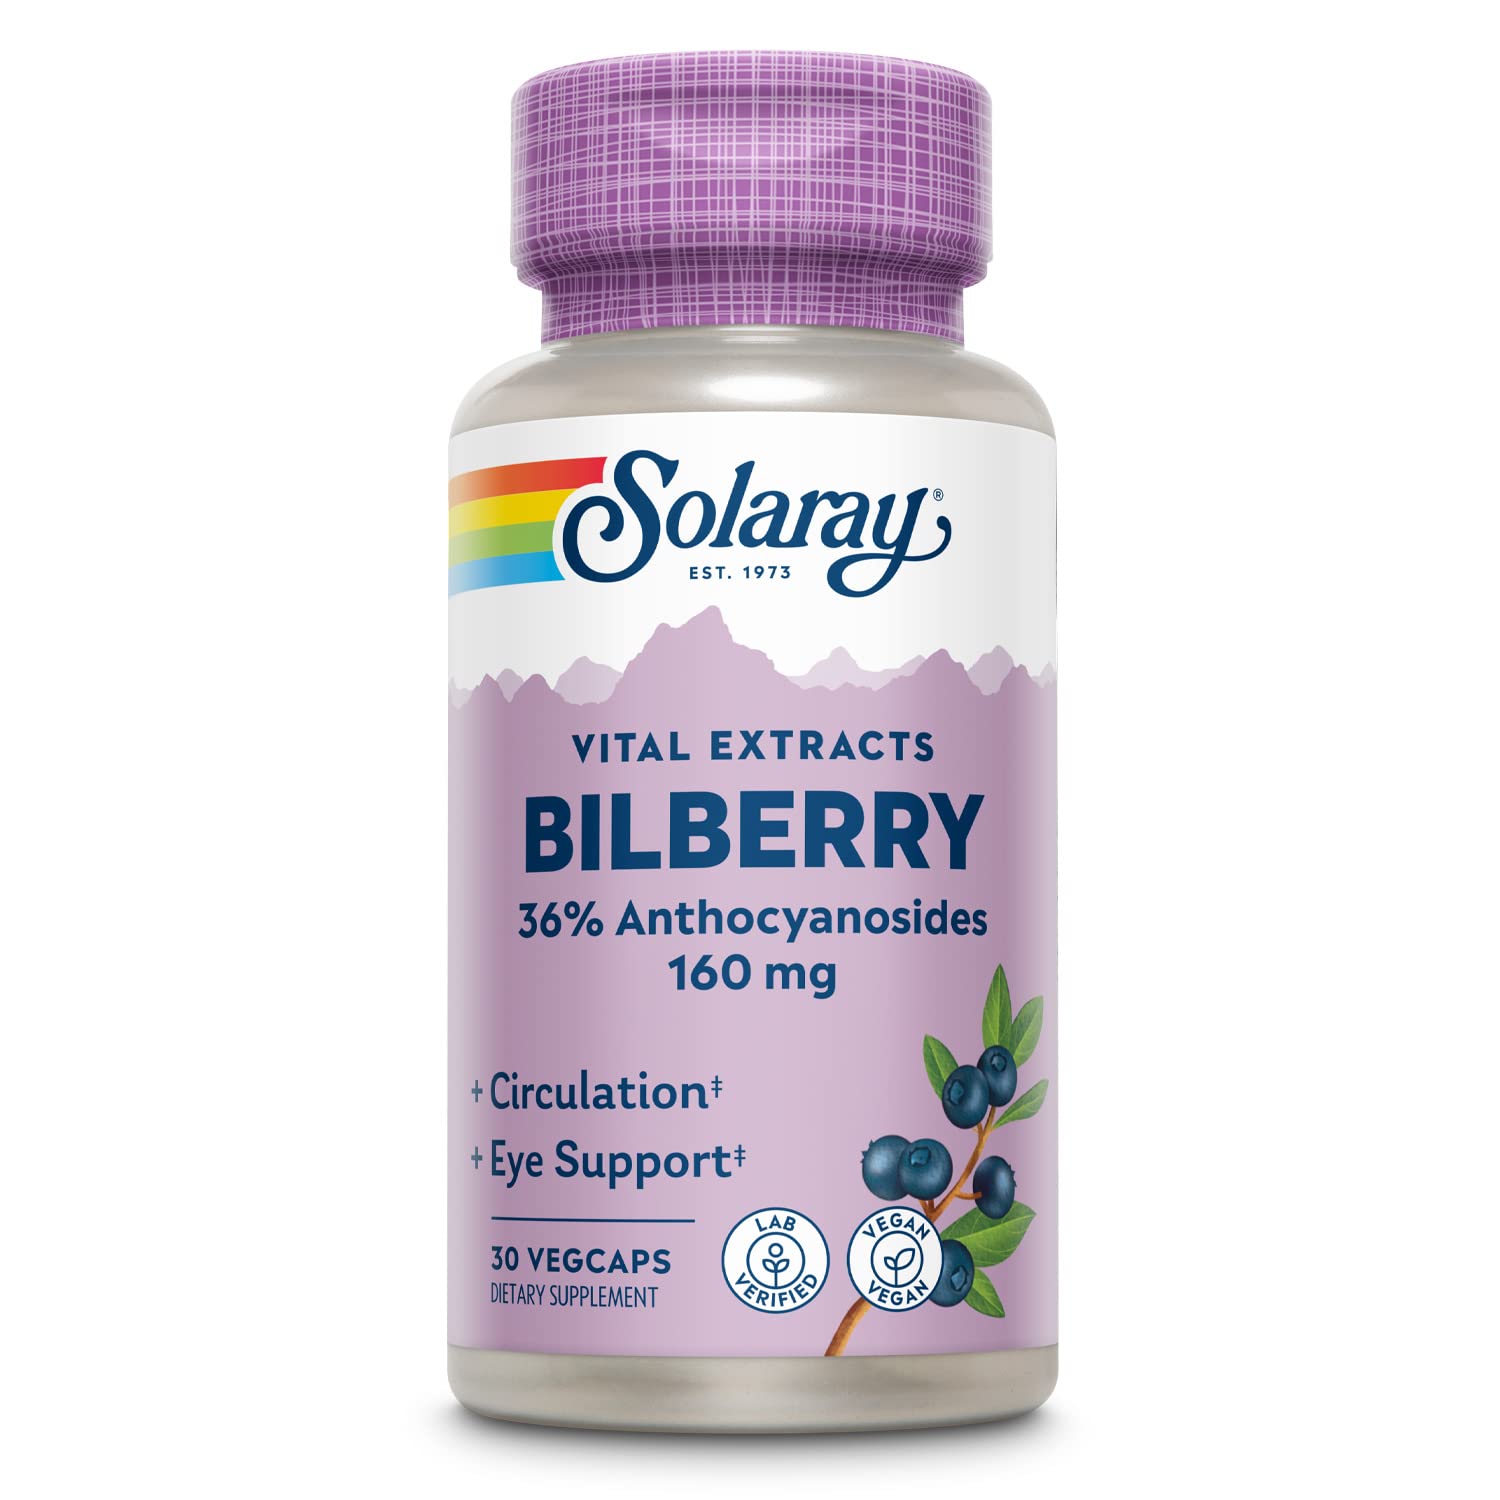 Solaray Bilberry Berry Extract One Daily 30ct VegCap